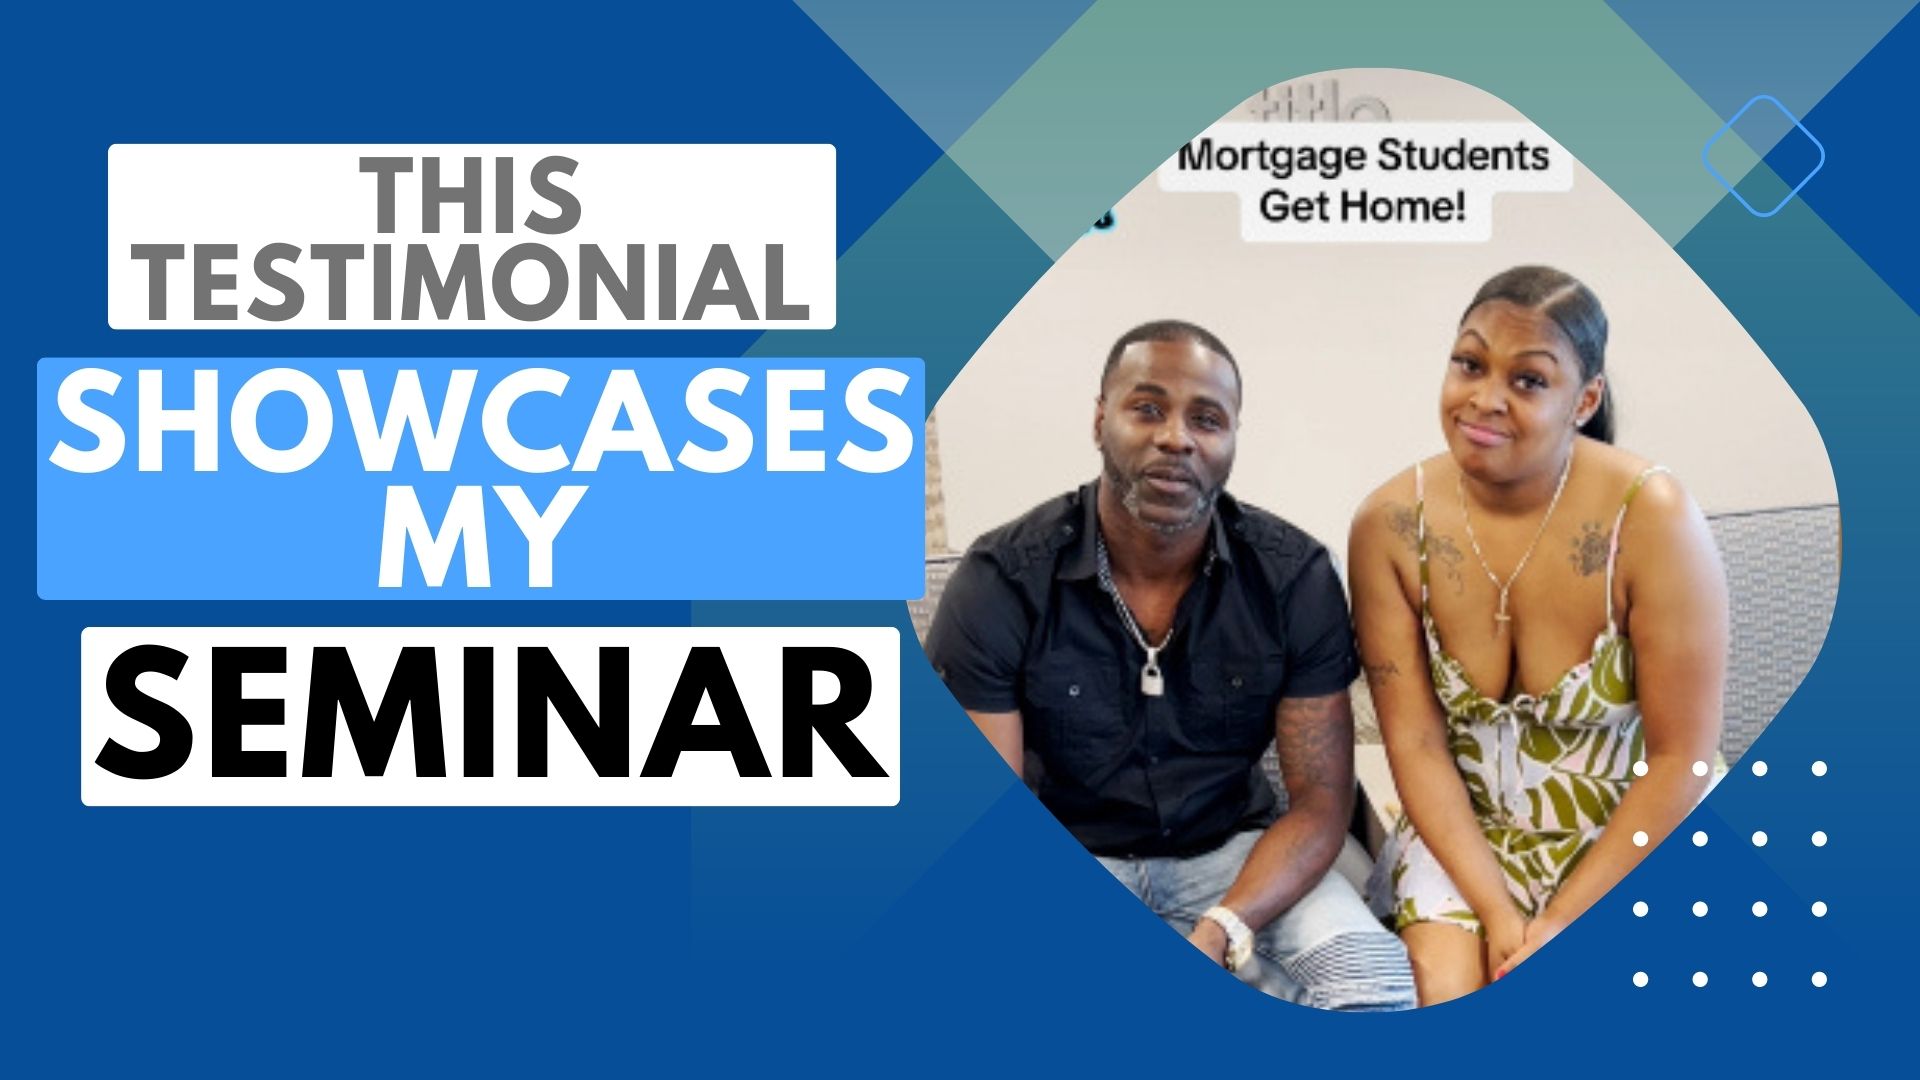 Unlocking Homeownership Dreams: Discover How This Seminar Makes It Possible